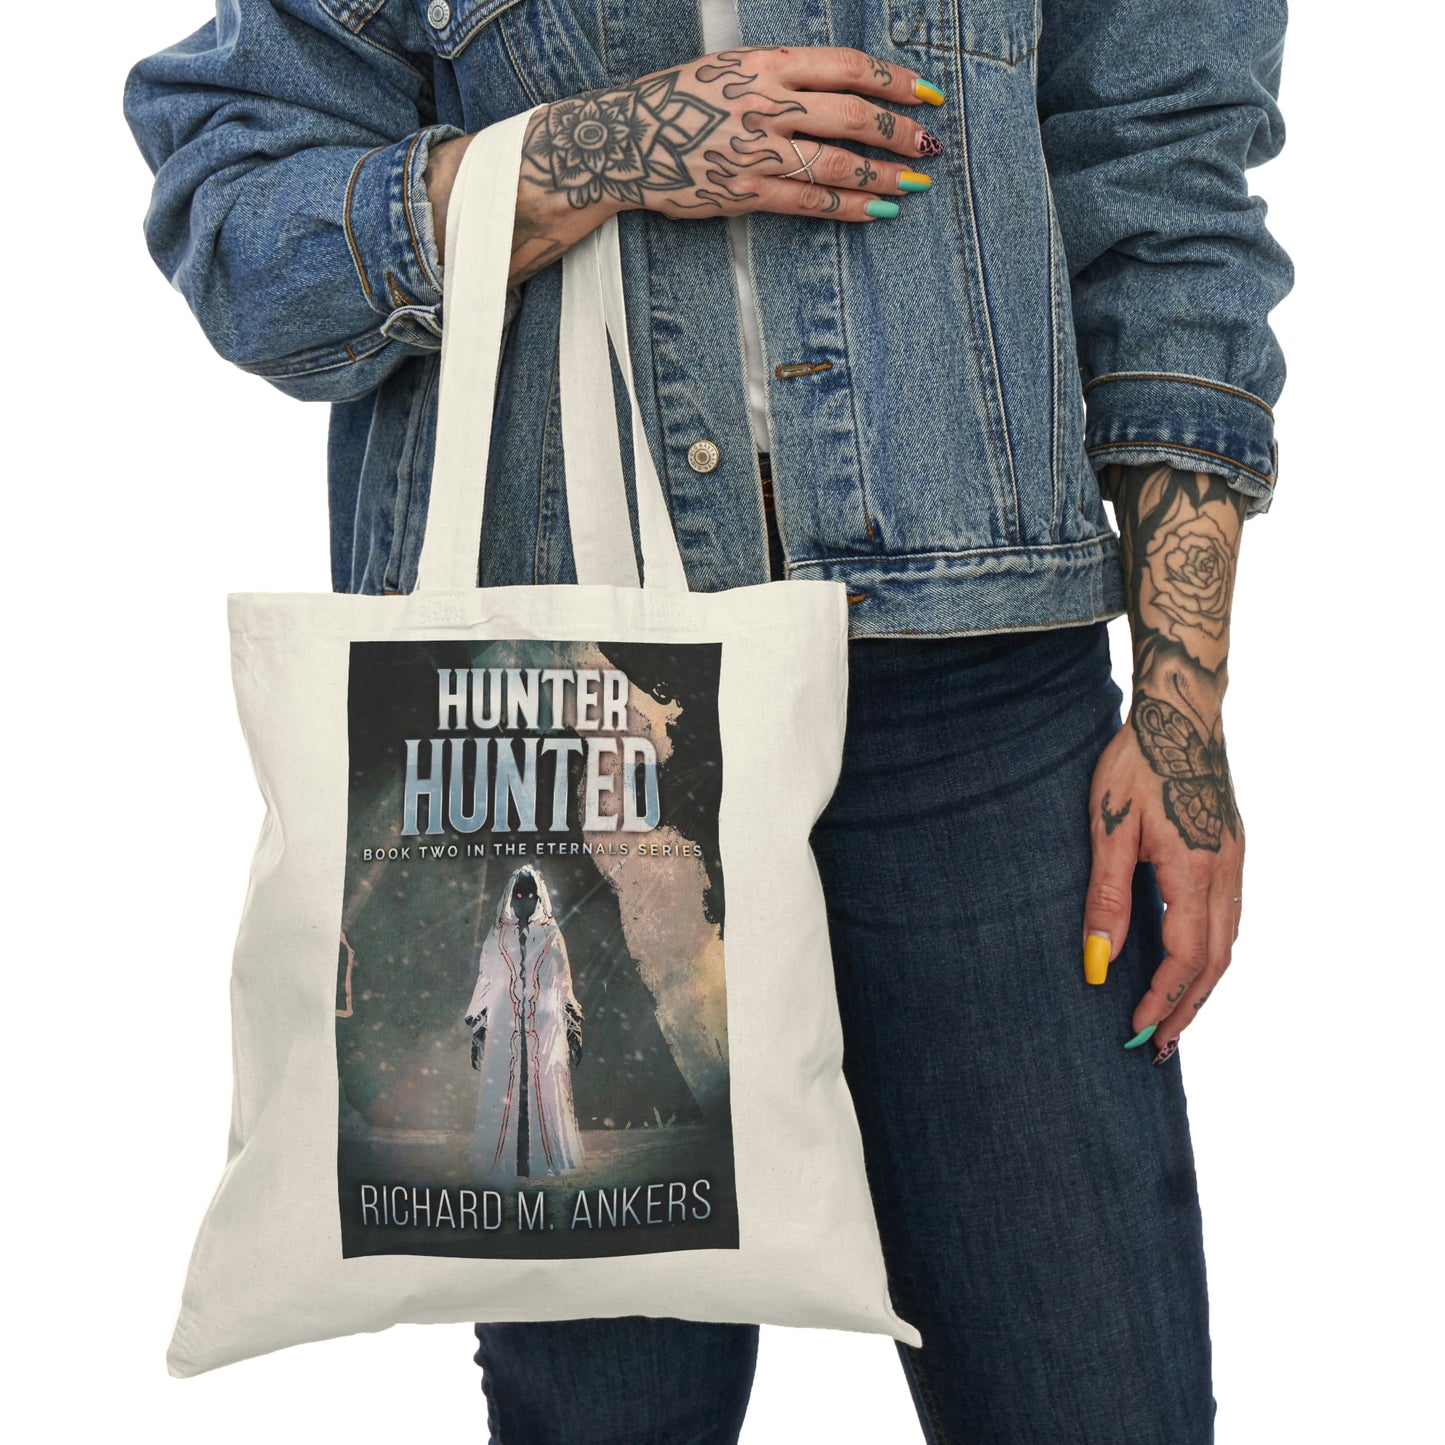 Hunter Hunted - Natural Tote Bag